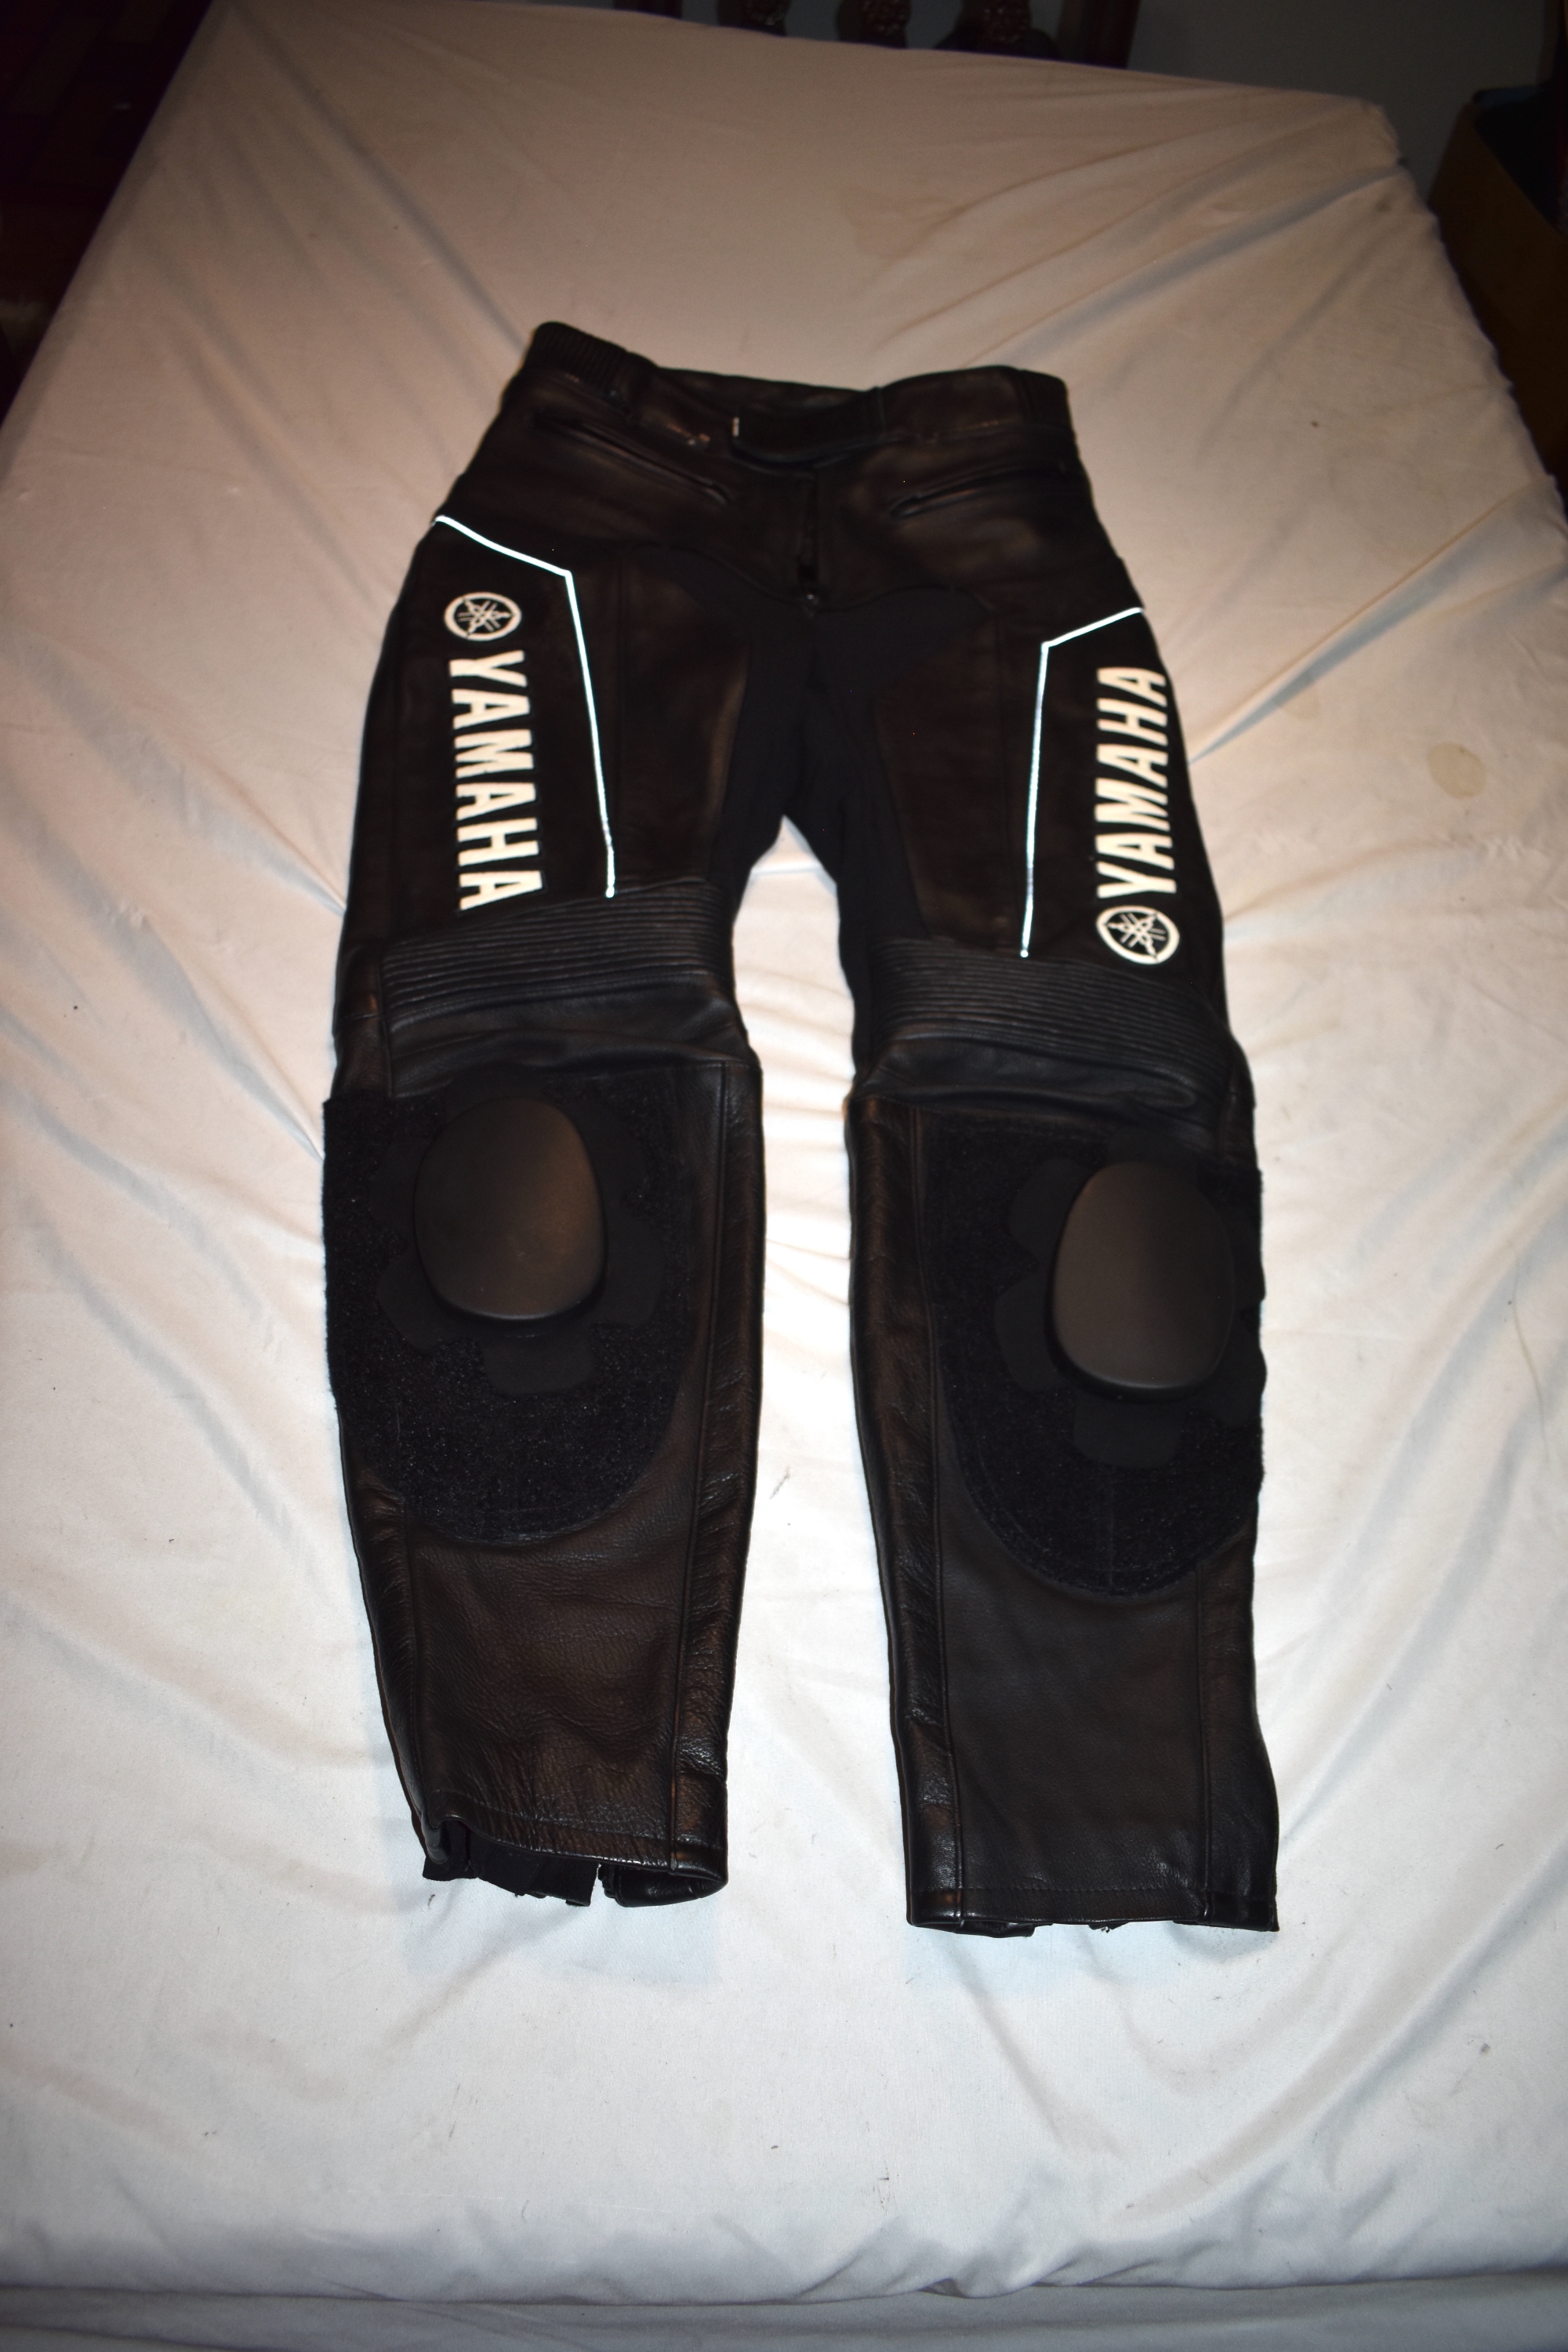 Yamaha Motor Performance by Hein Gericke Leather Sport Racing Pants, Size 32 - Like New!